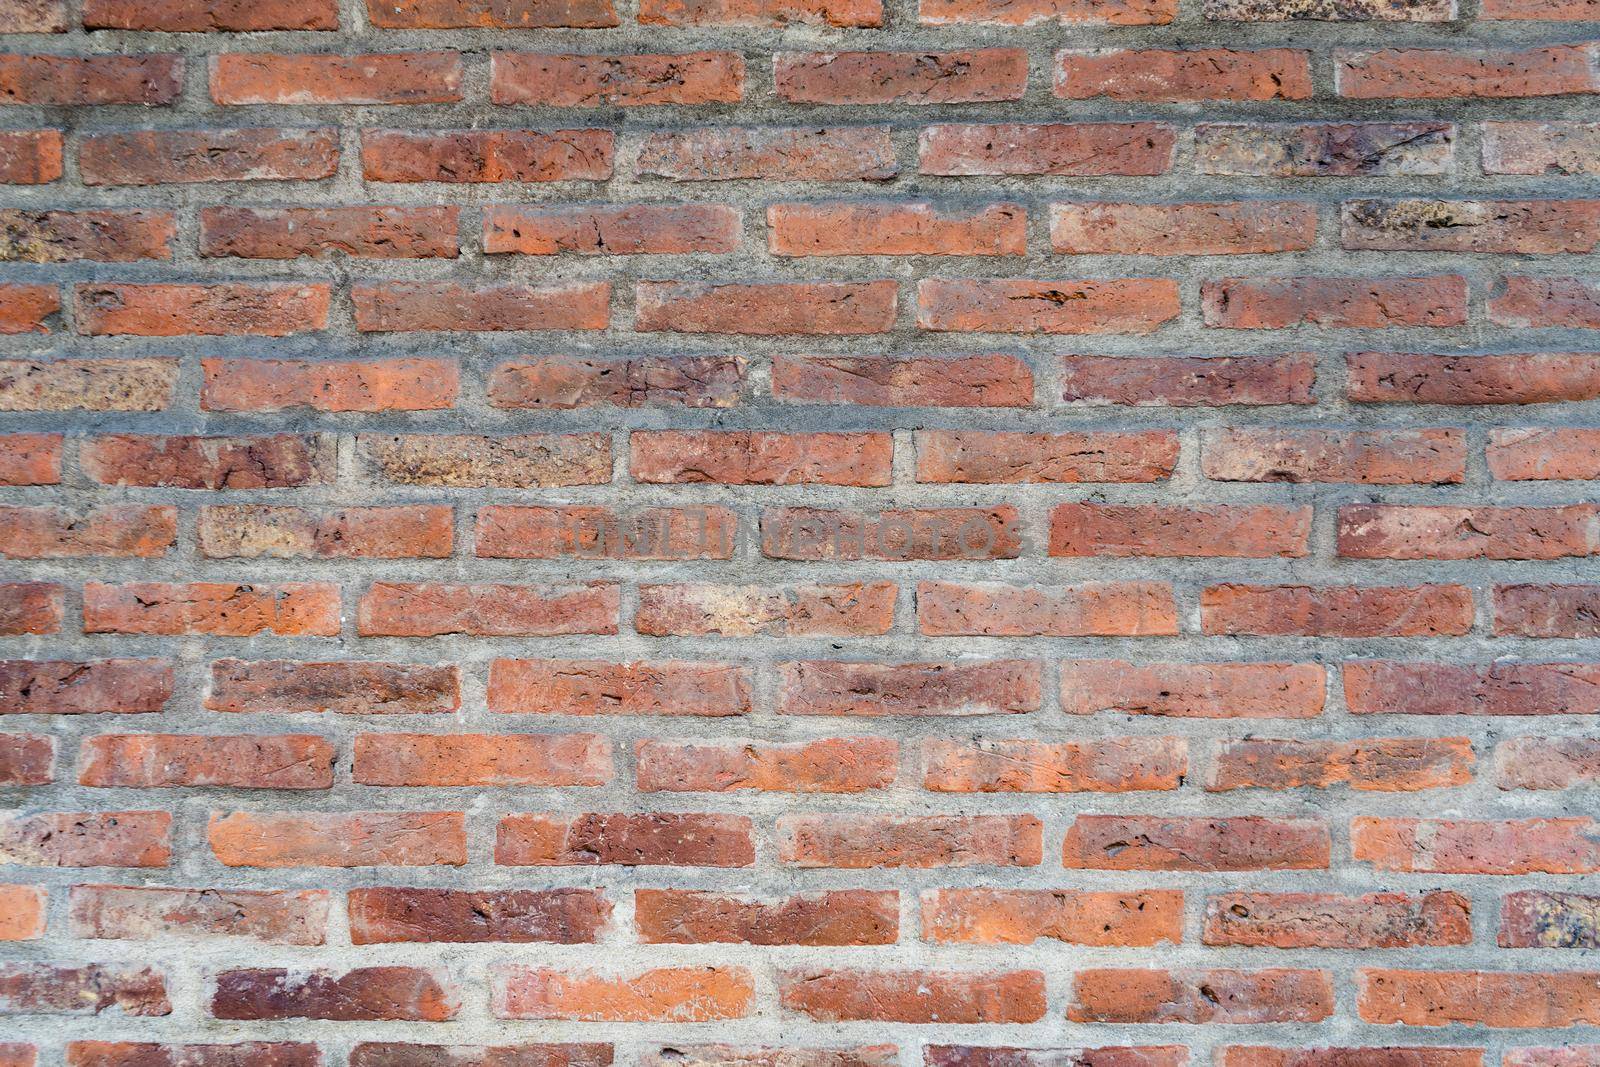 A Background of rectangular bricks on a wall.